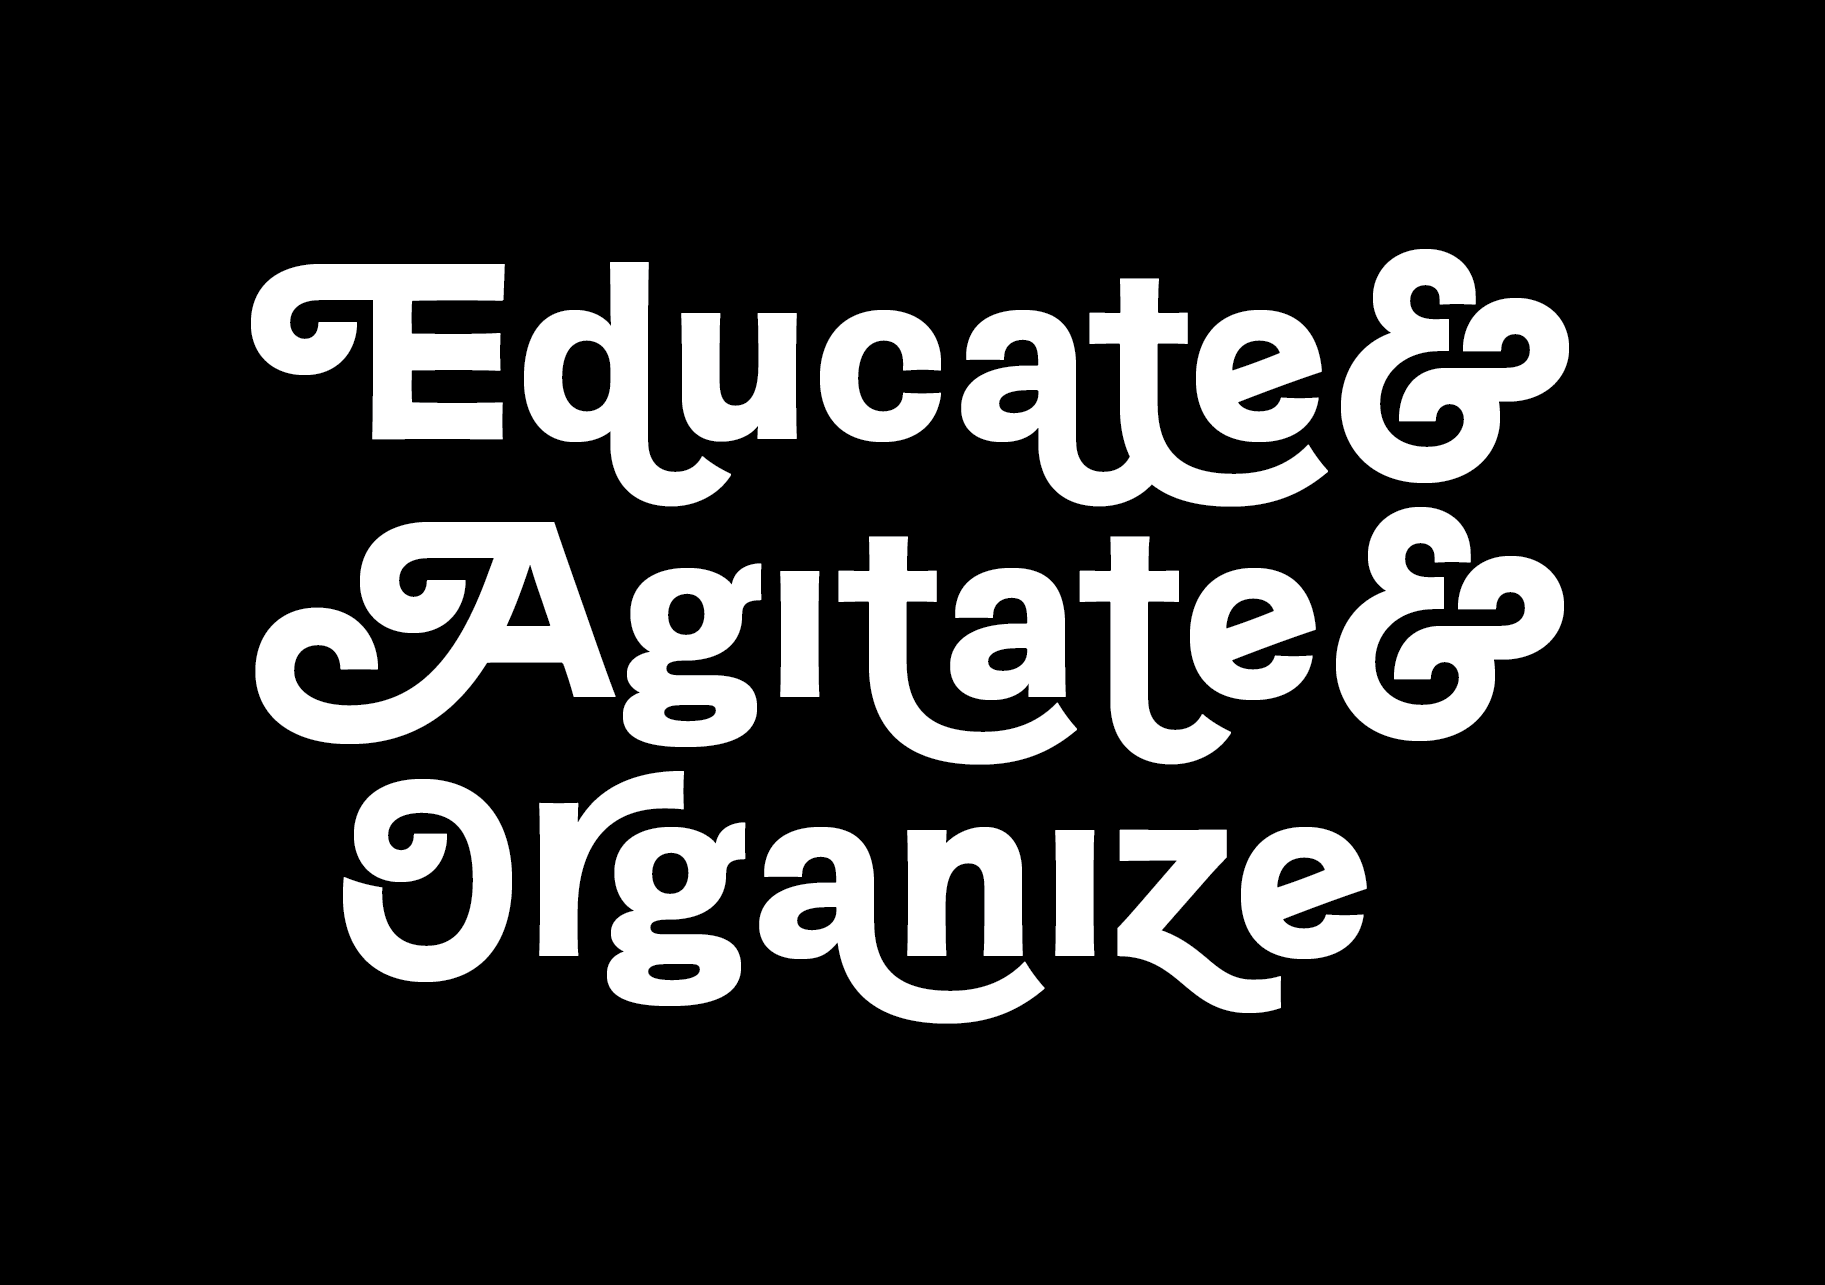 Educate & Agitate & Organize